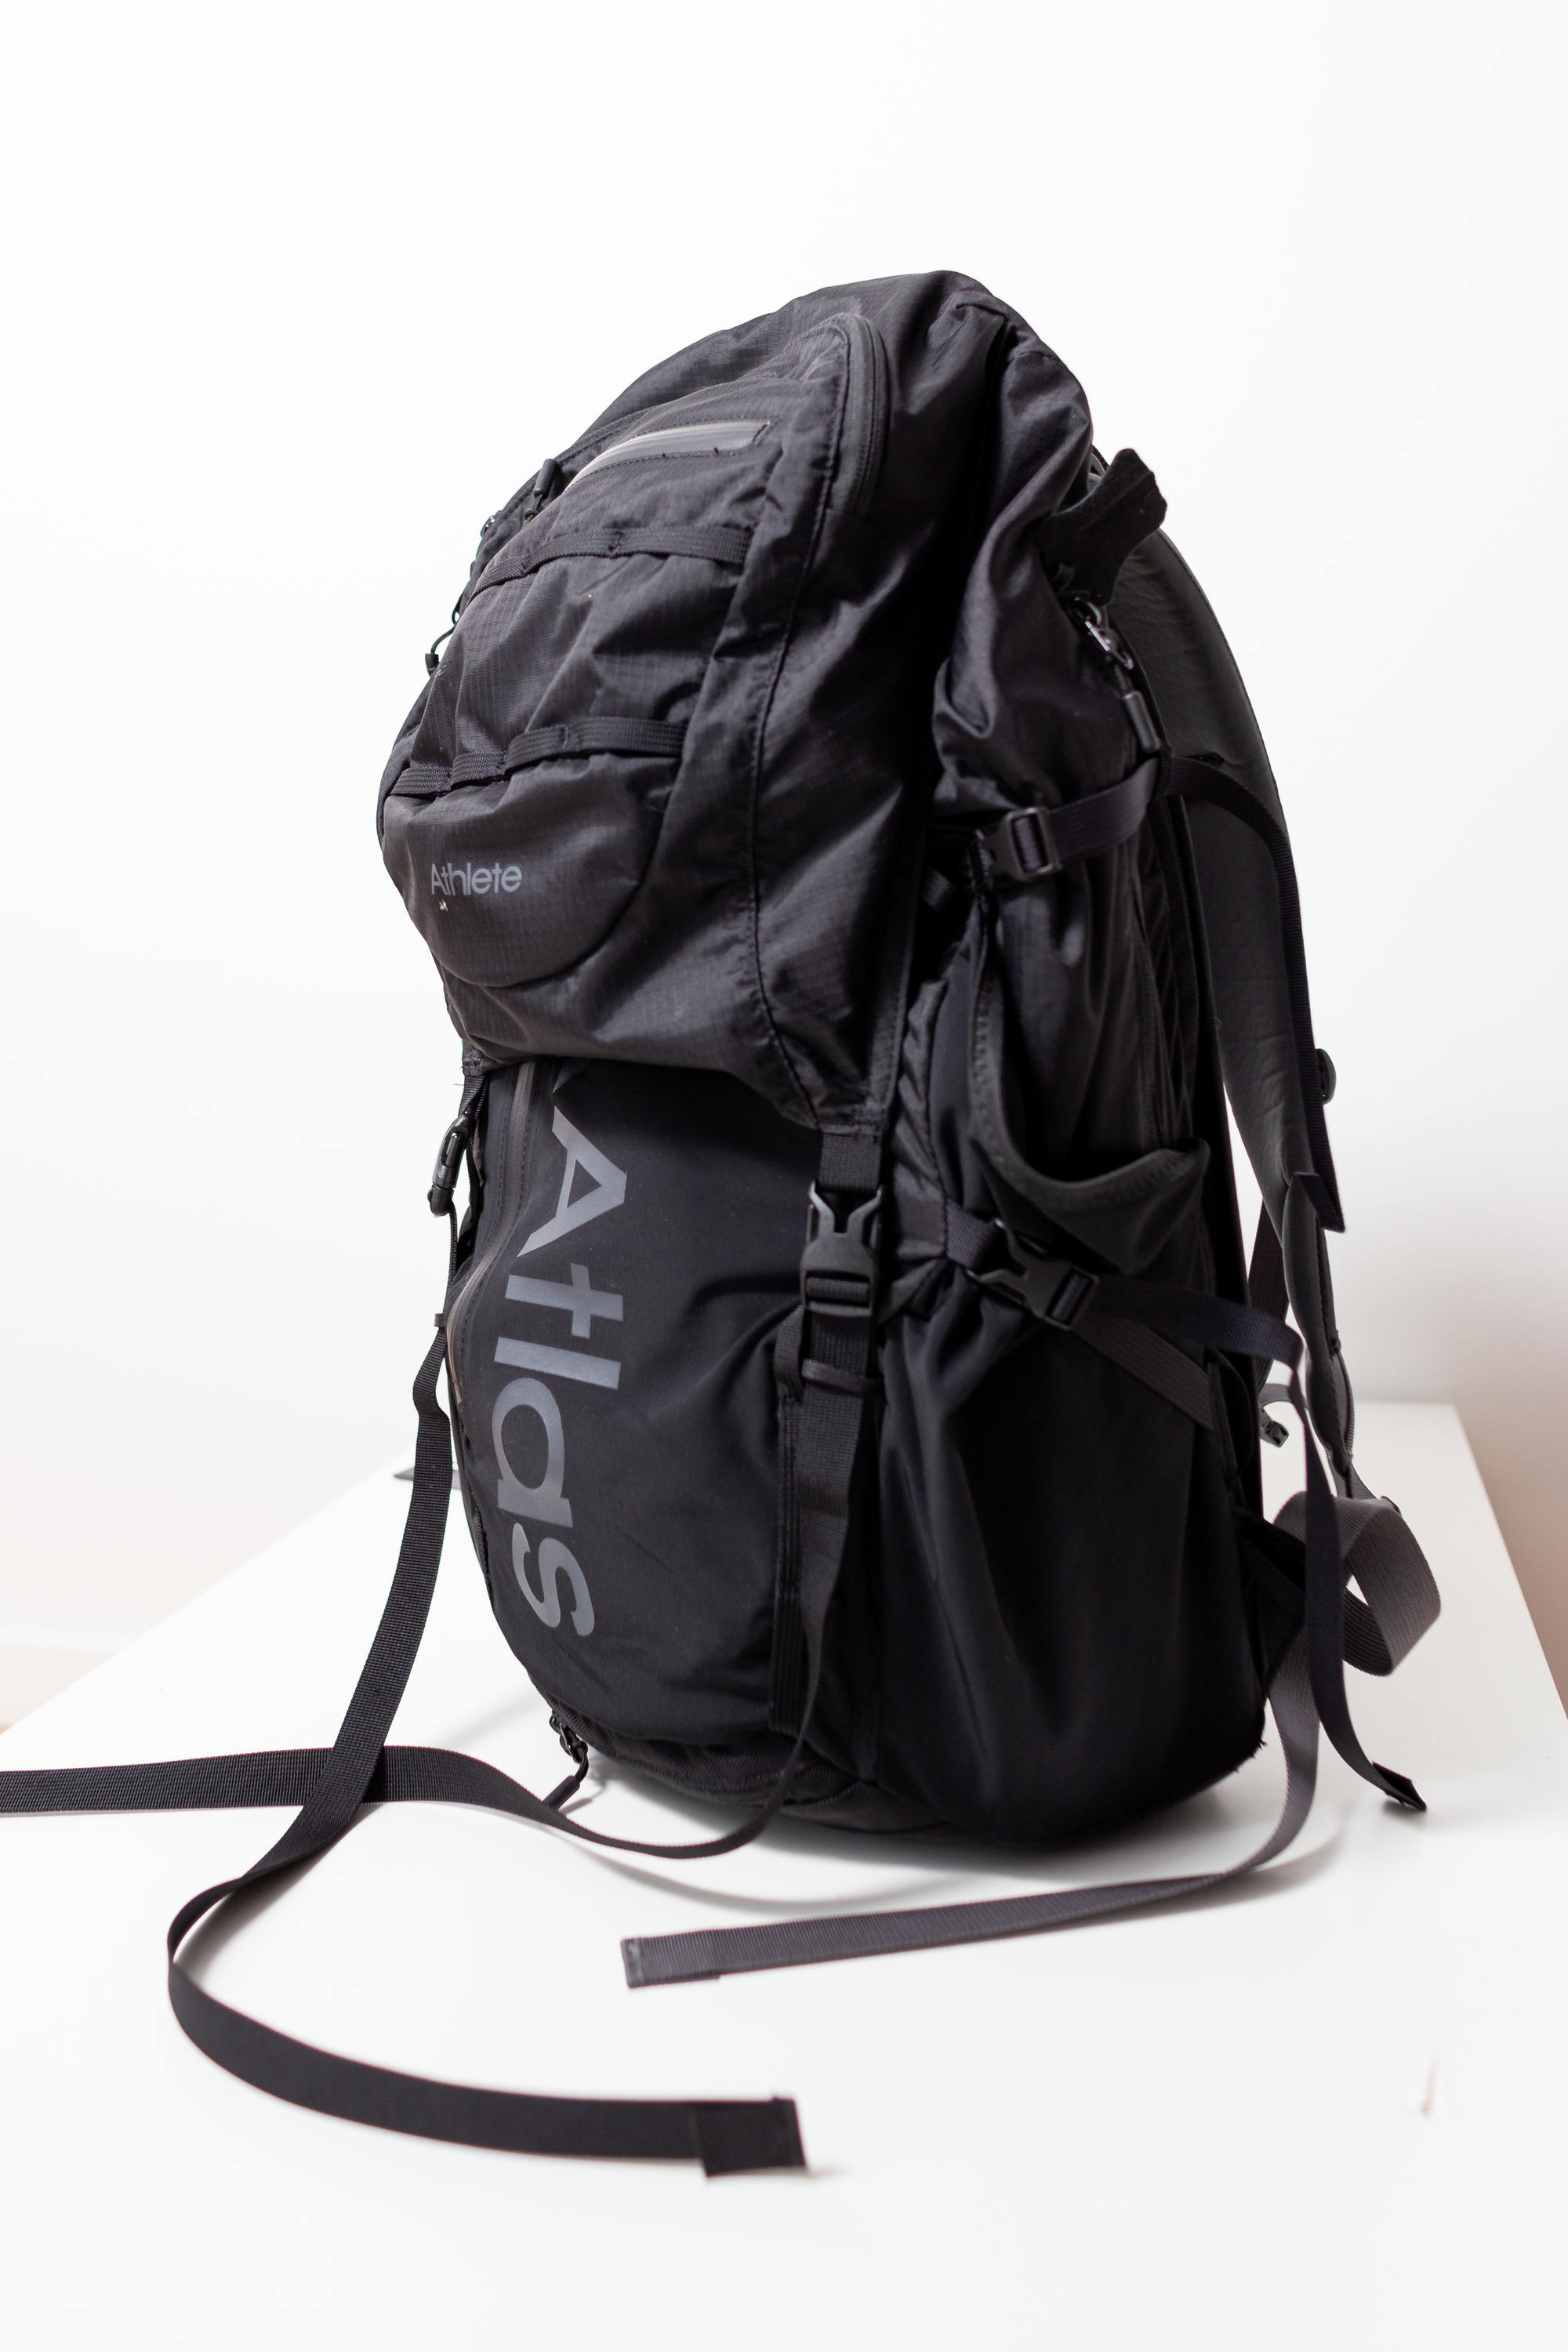 atlas athlete camera backpack